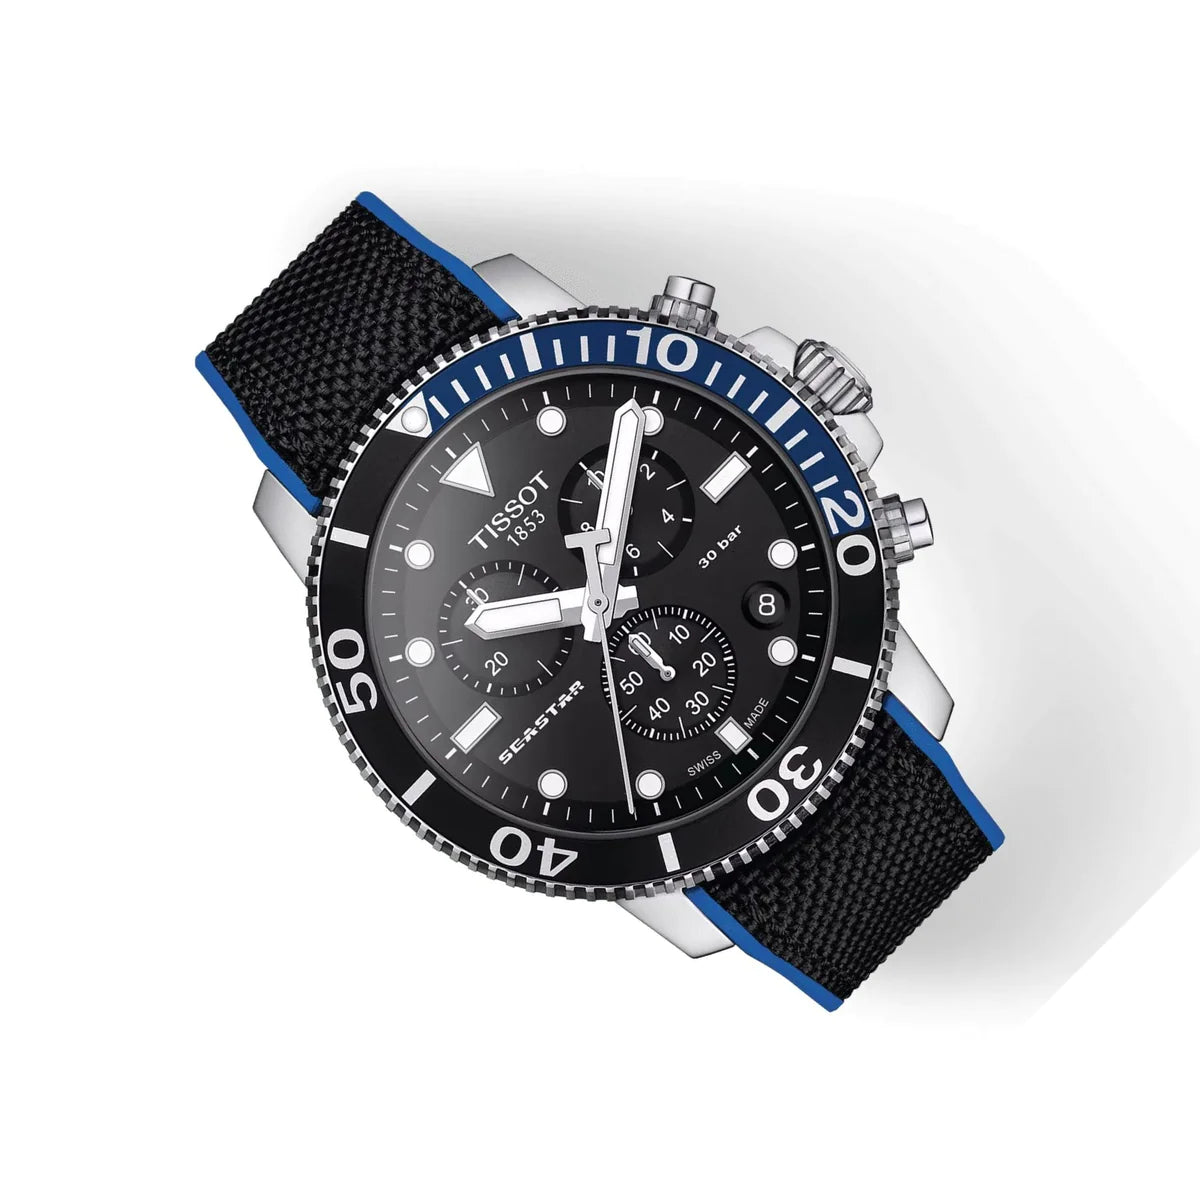 Tissot T1204171705103 Seastar 1000 Chronograph Black Dial Black & Blue Strap Men’s Watch - mzwatcheslk srilanka